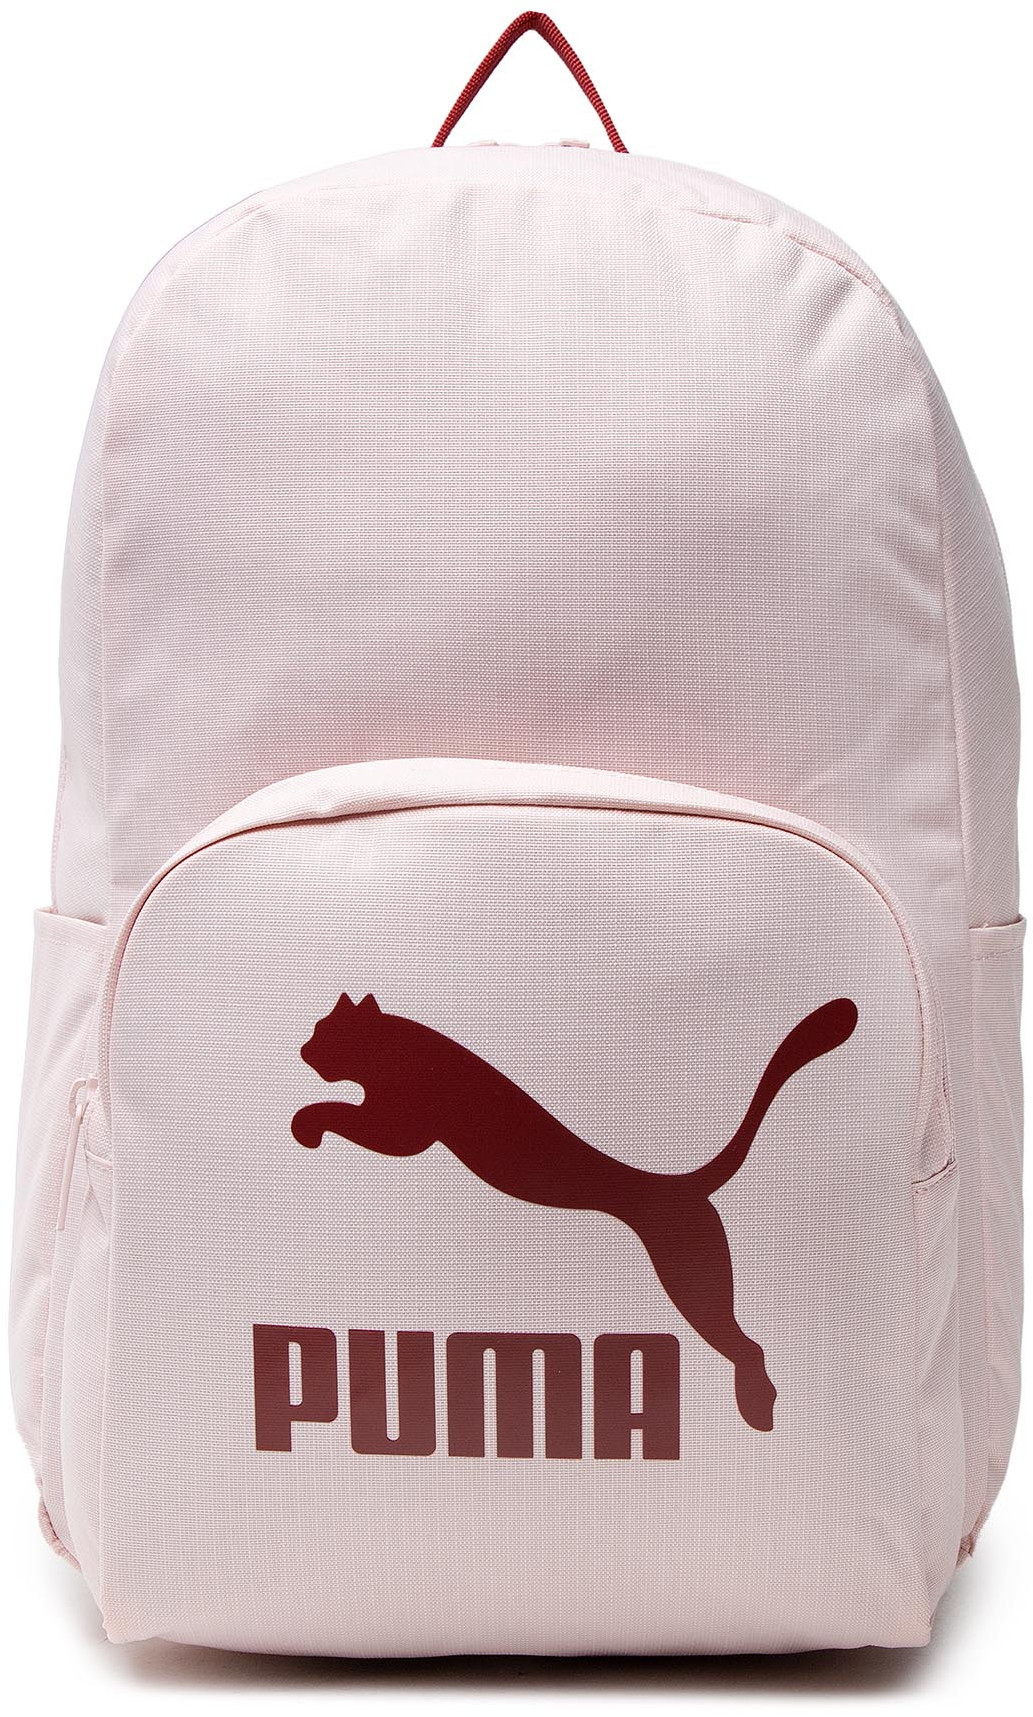 Puma Plecak Originals Urban Backpack 078480 02 Lotus